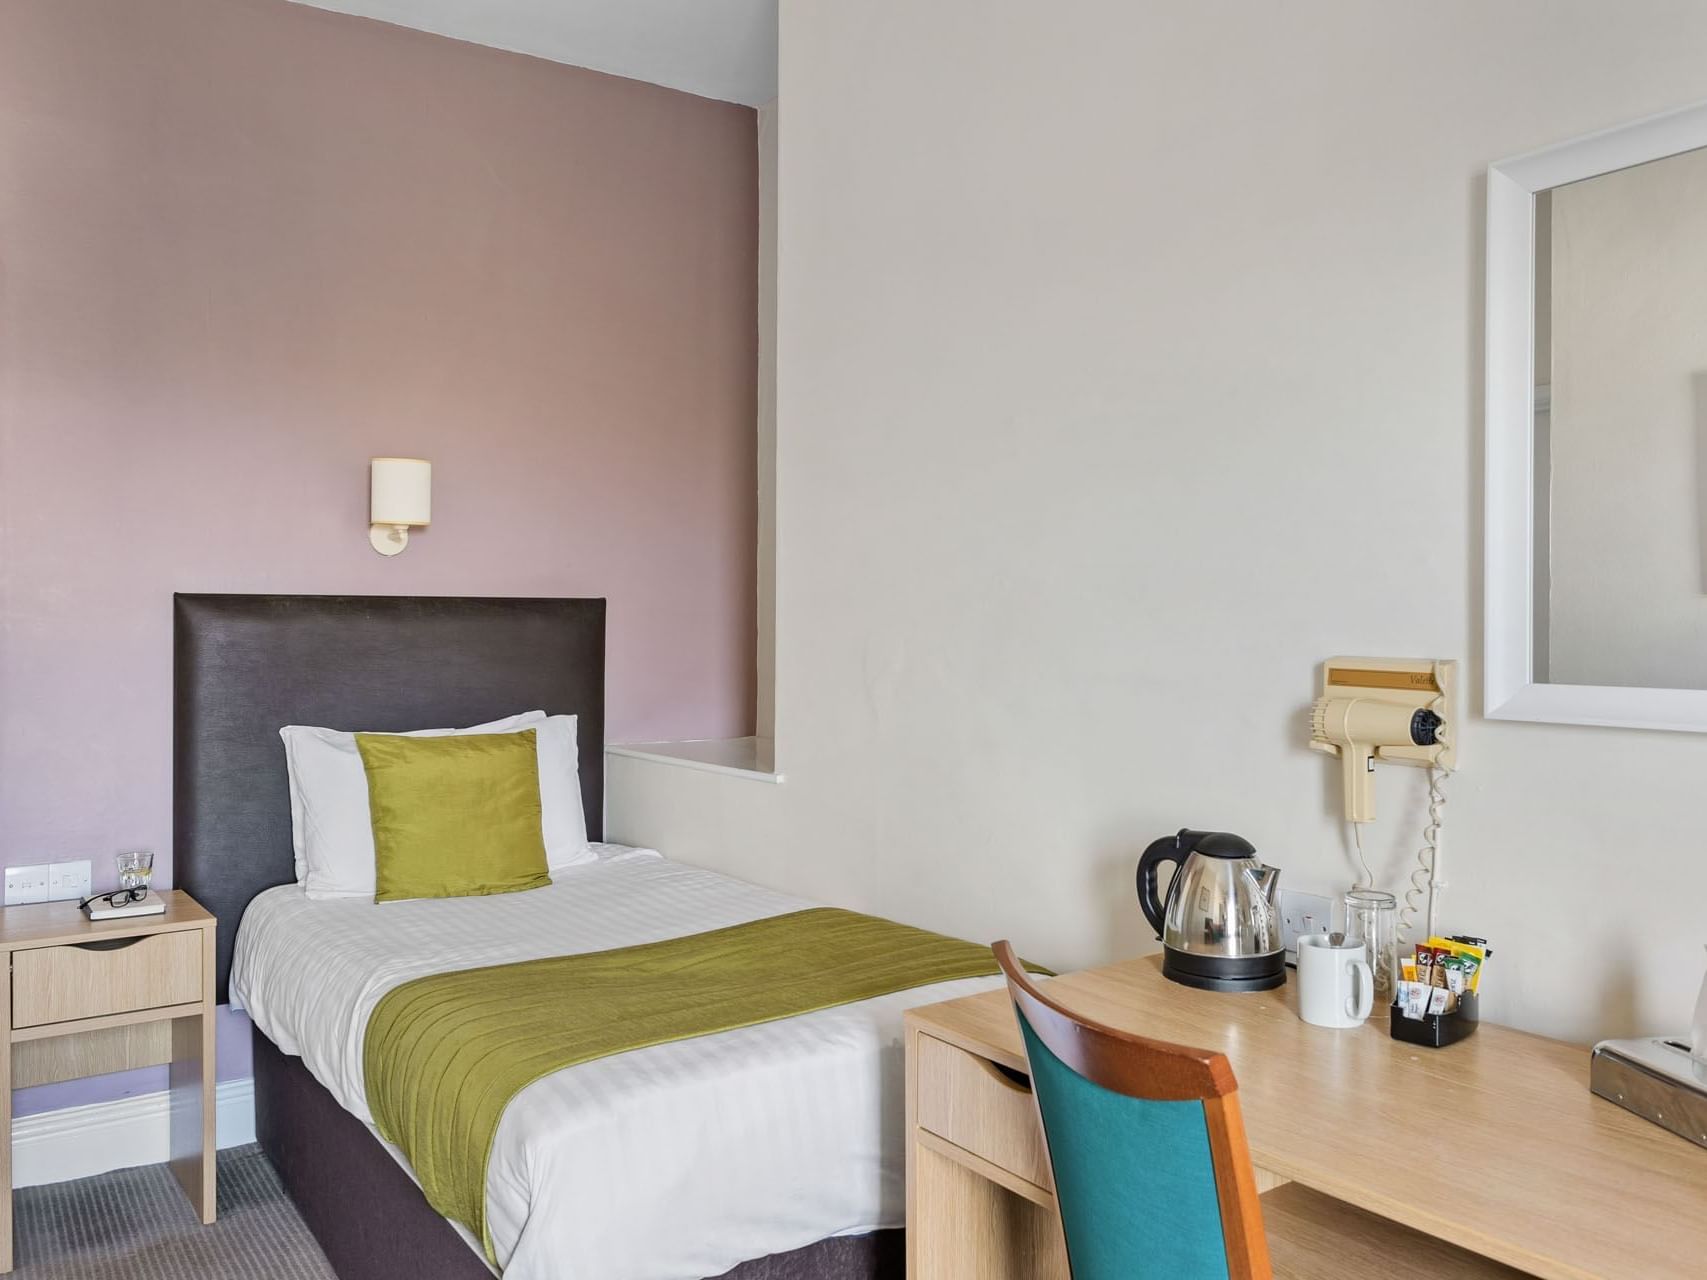 Standard Single Room at The Grand Atlantic Hotel in Weston-super-Mare